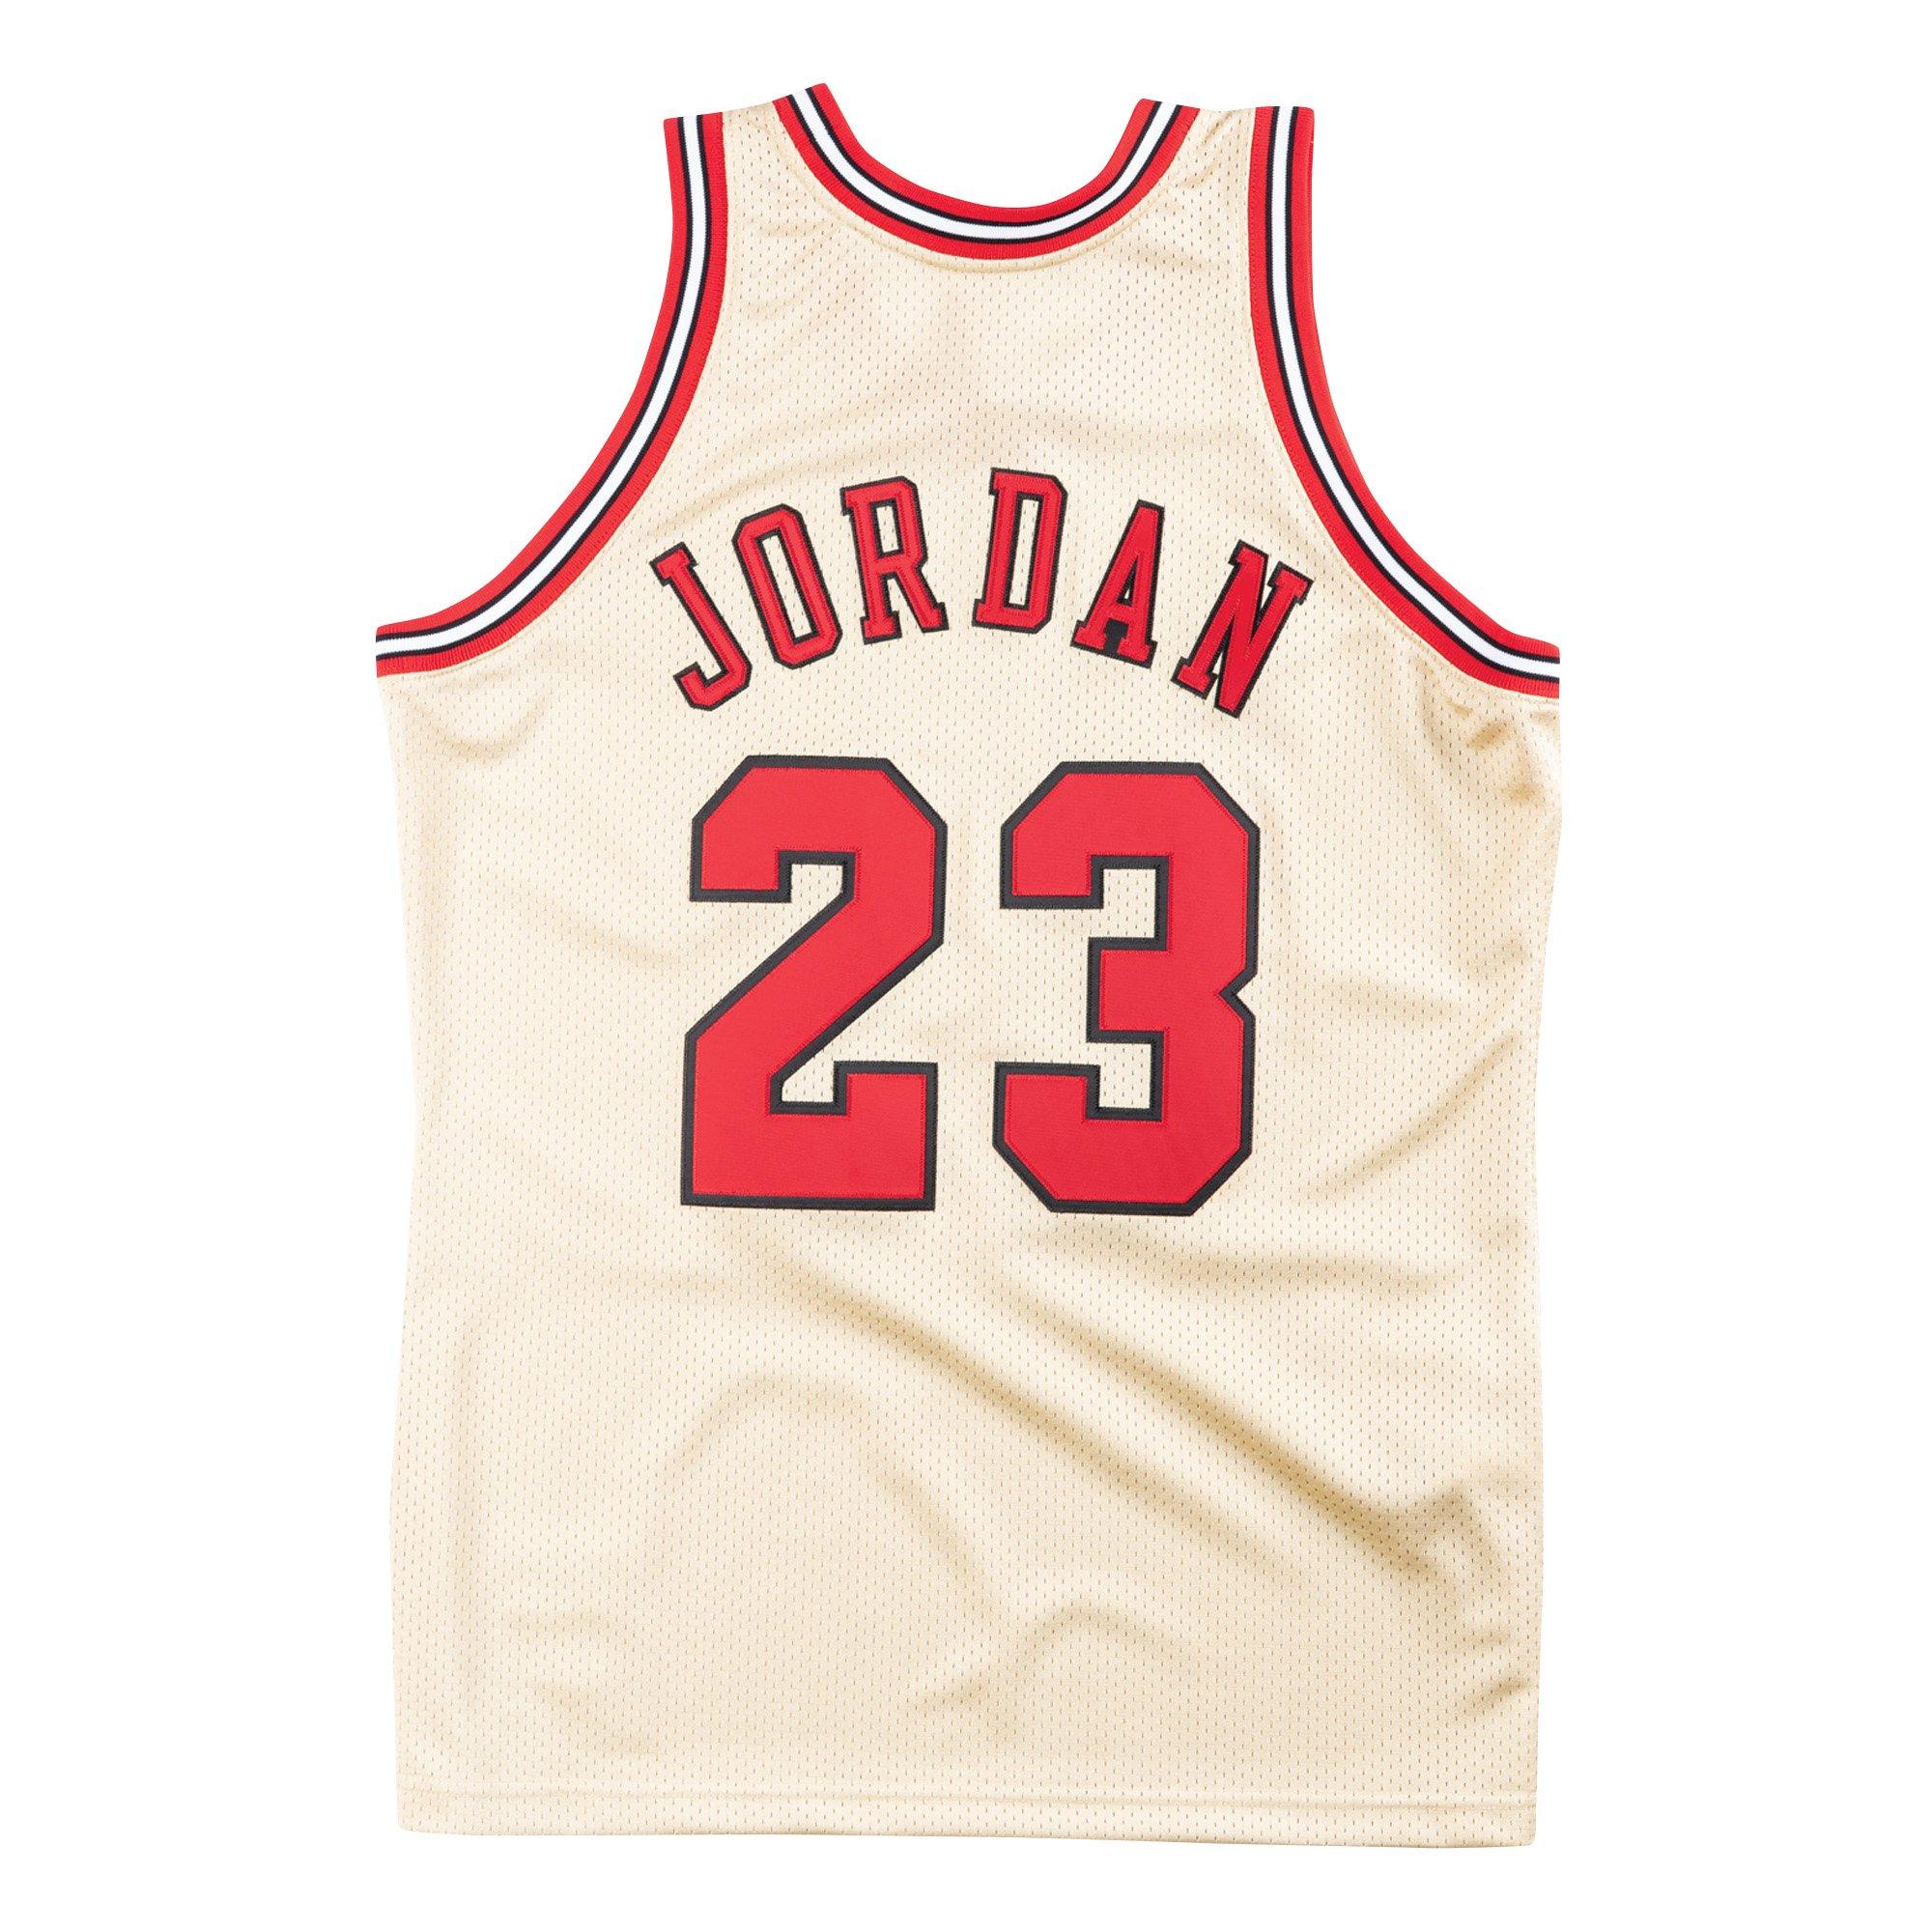 where can i buy a michael jordan jersey